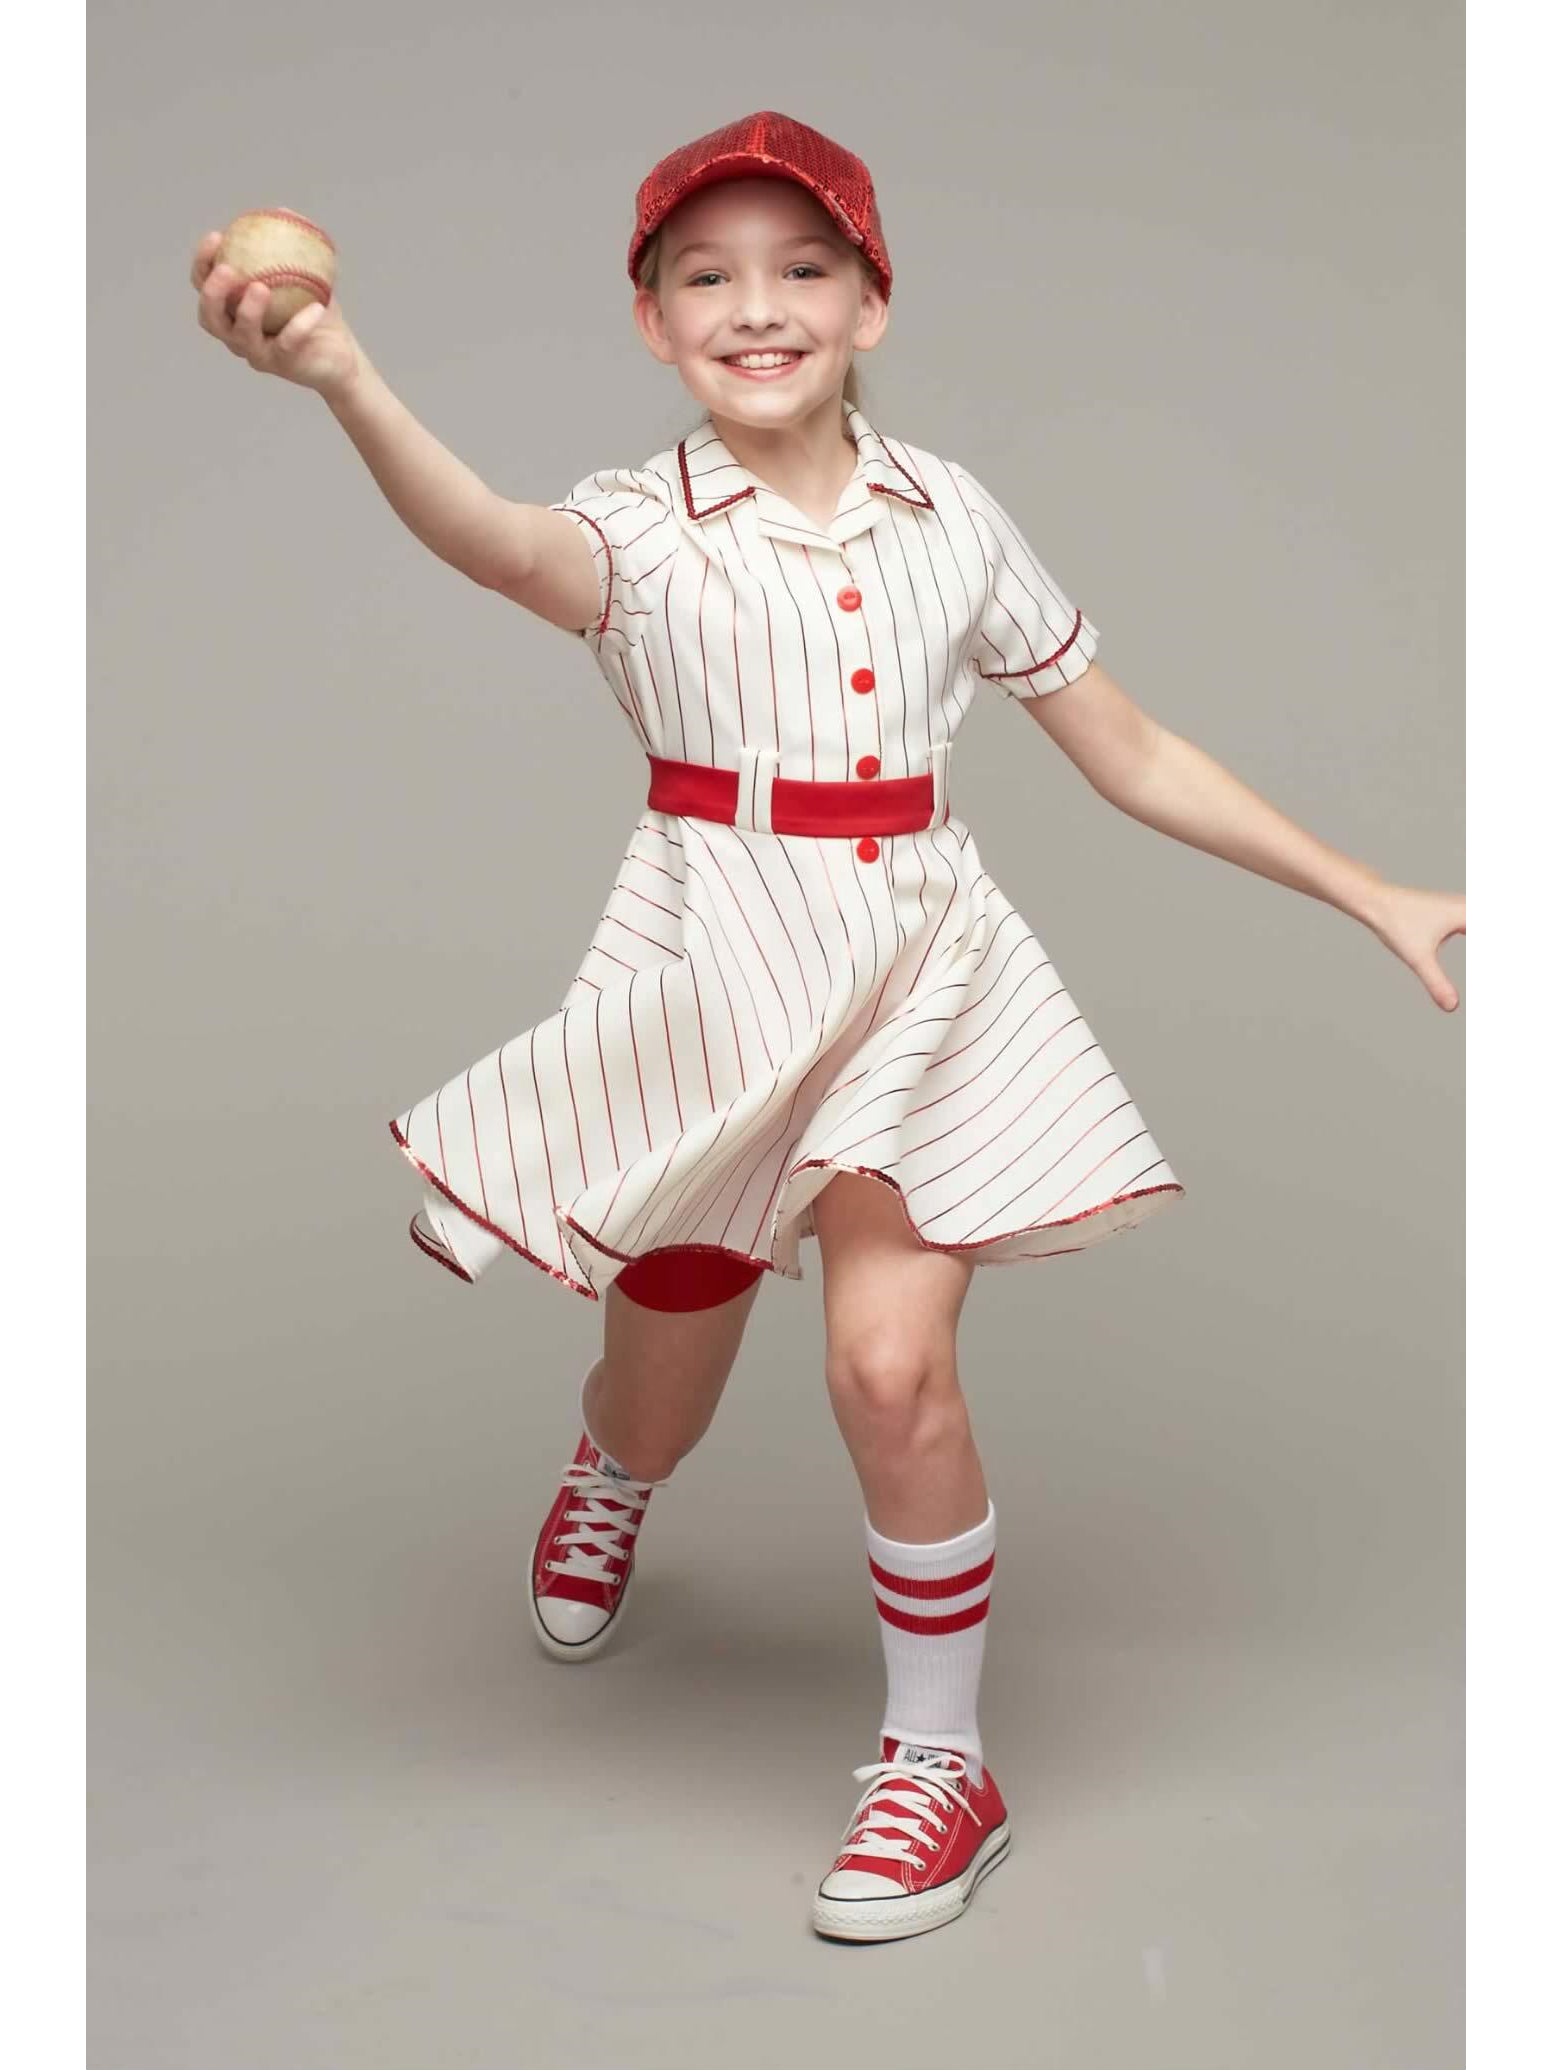 Retro Baseball Player Costume for Girls – Chasing Fireflies